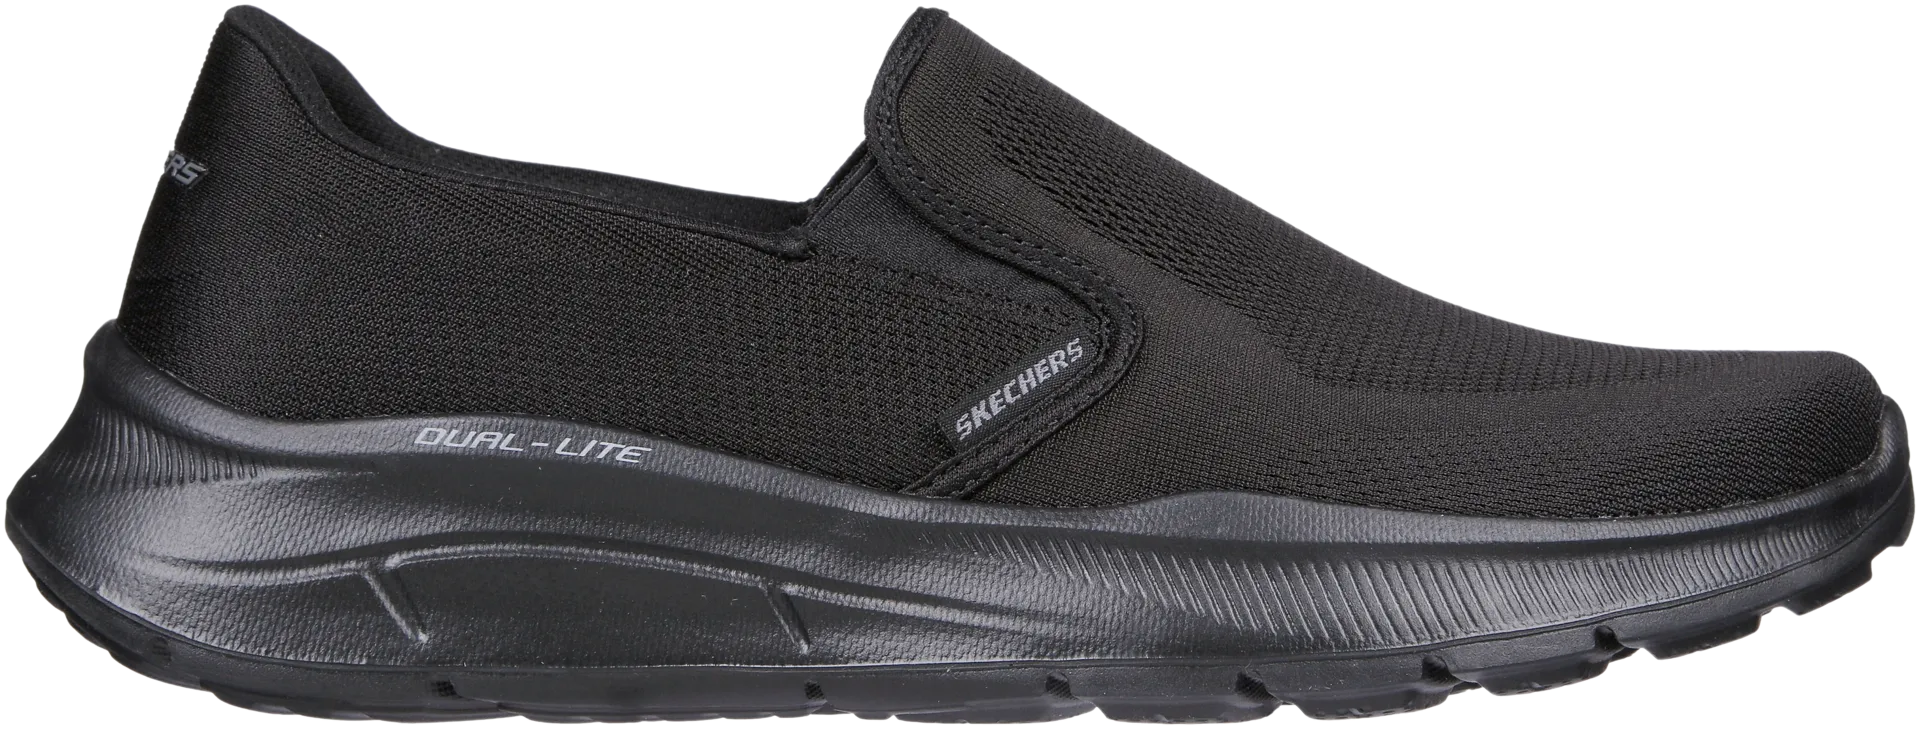 Skechers miesten loafer Equalizer 5.0 GL - MUSTA - 5